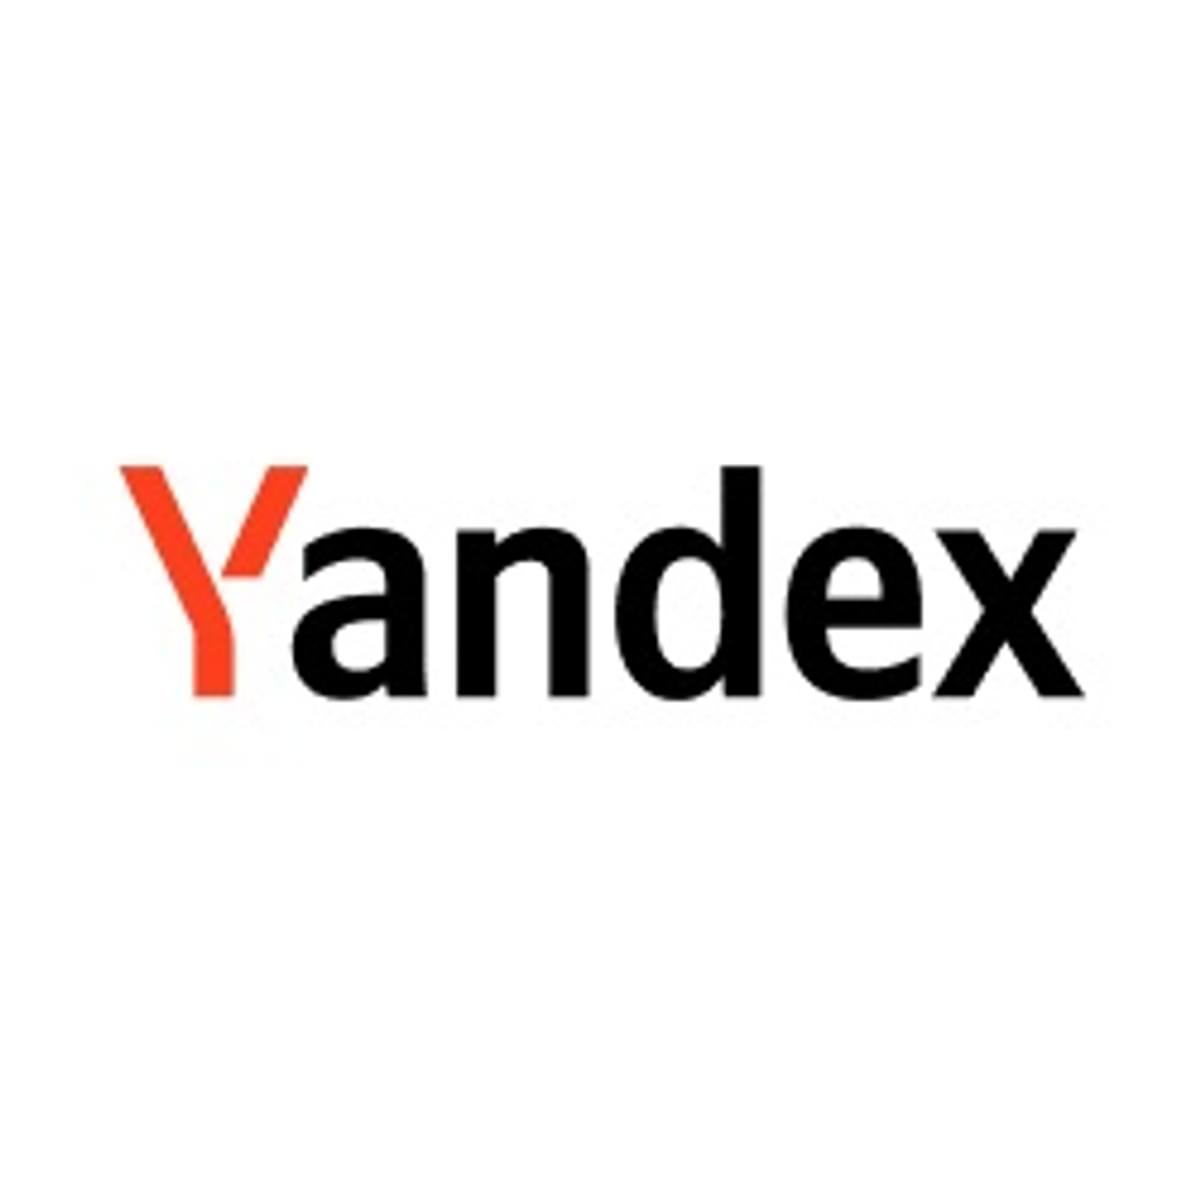 Yandex koopt Uber belang in FoodTech, Delivery en Self-Driving image